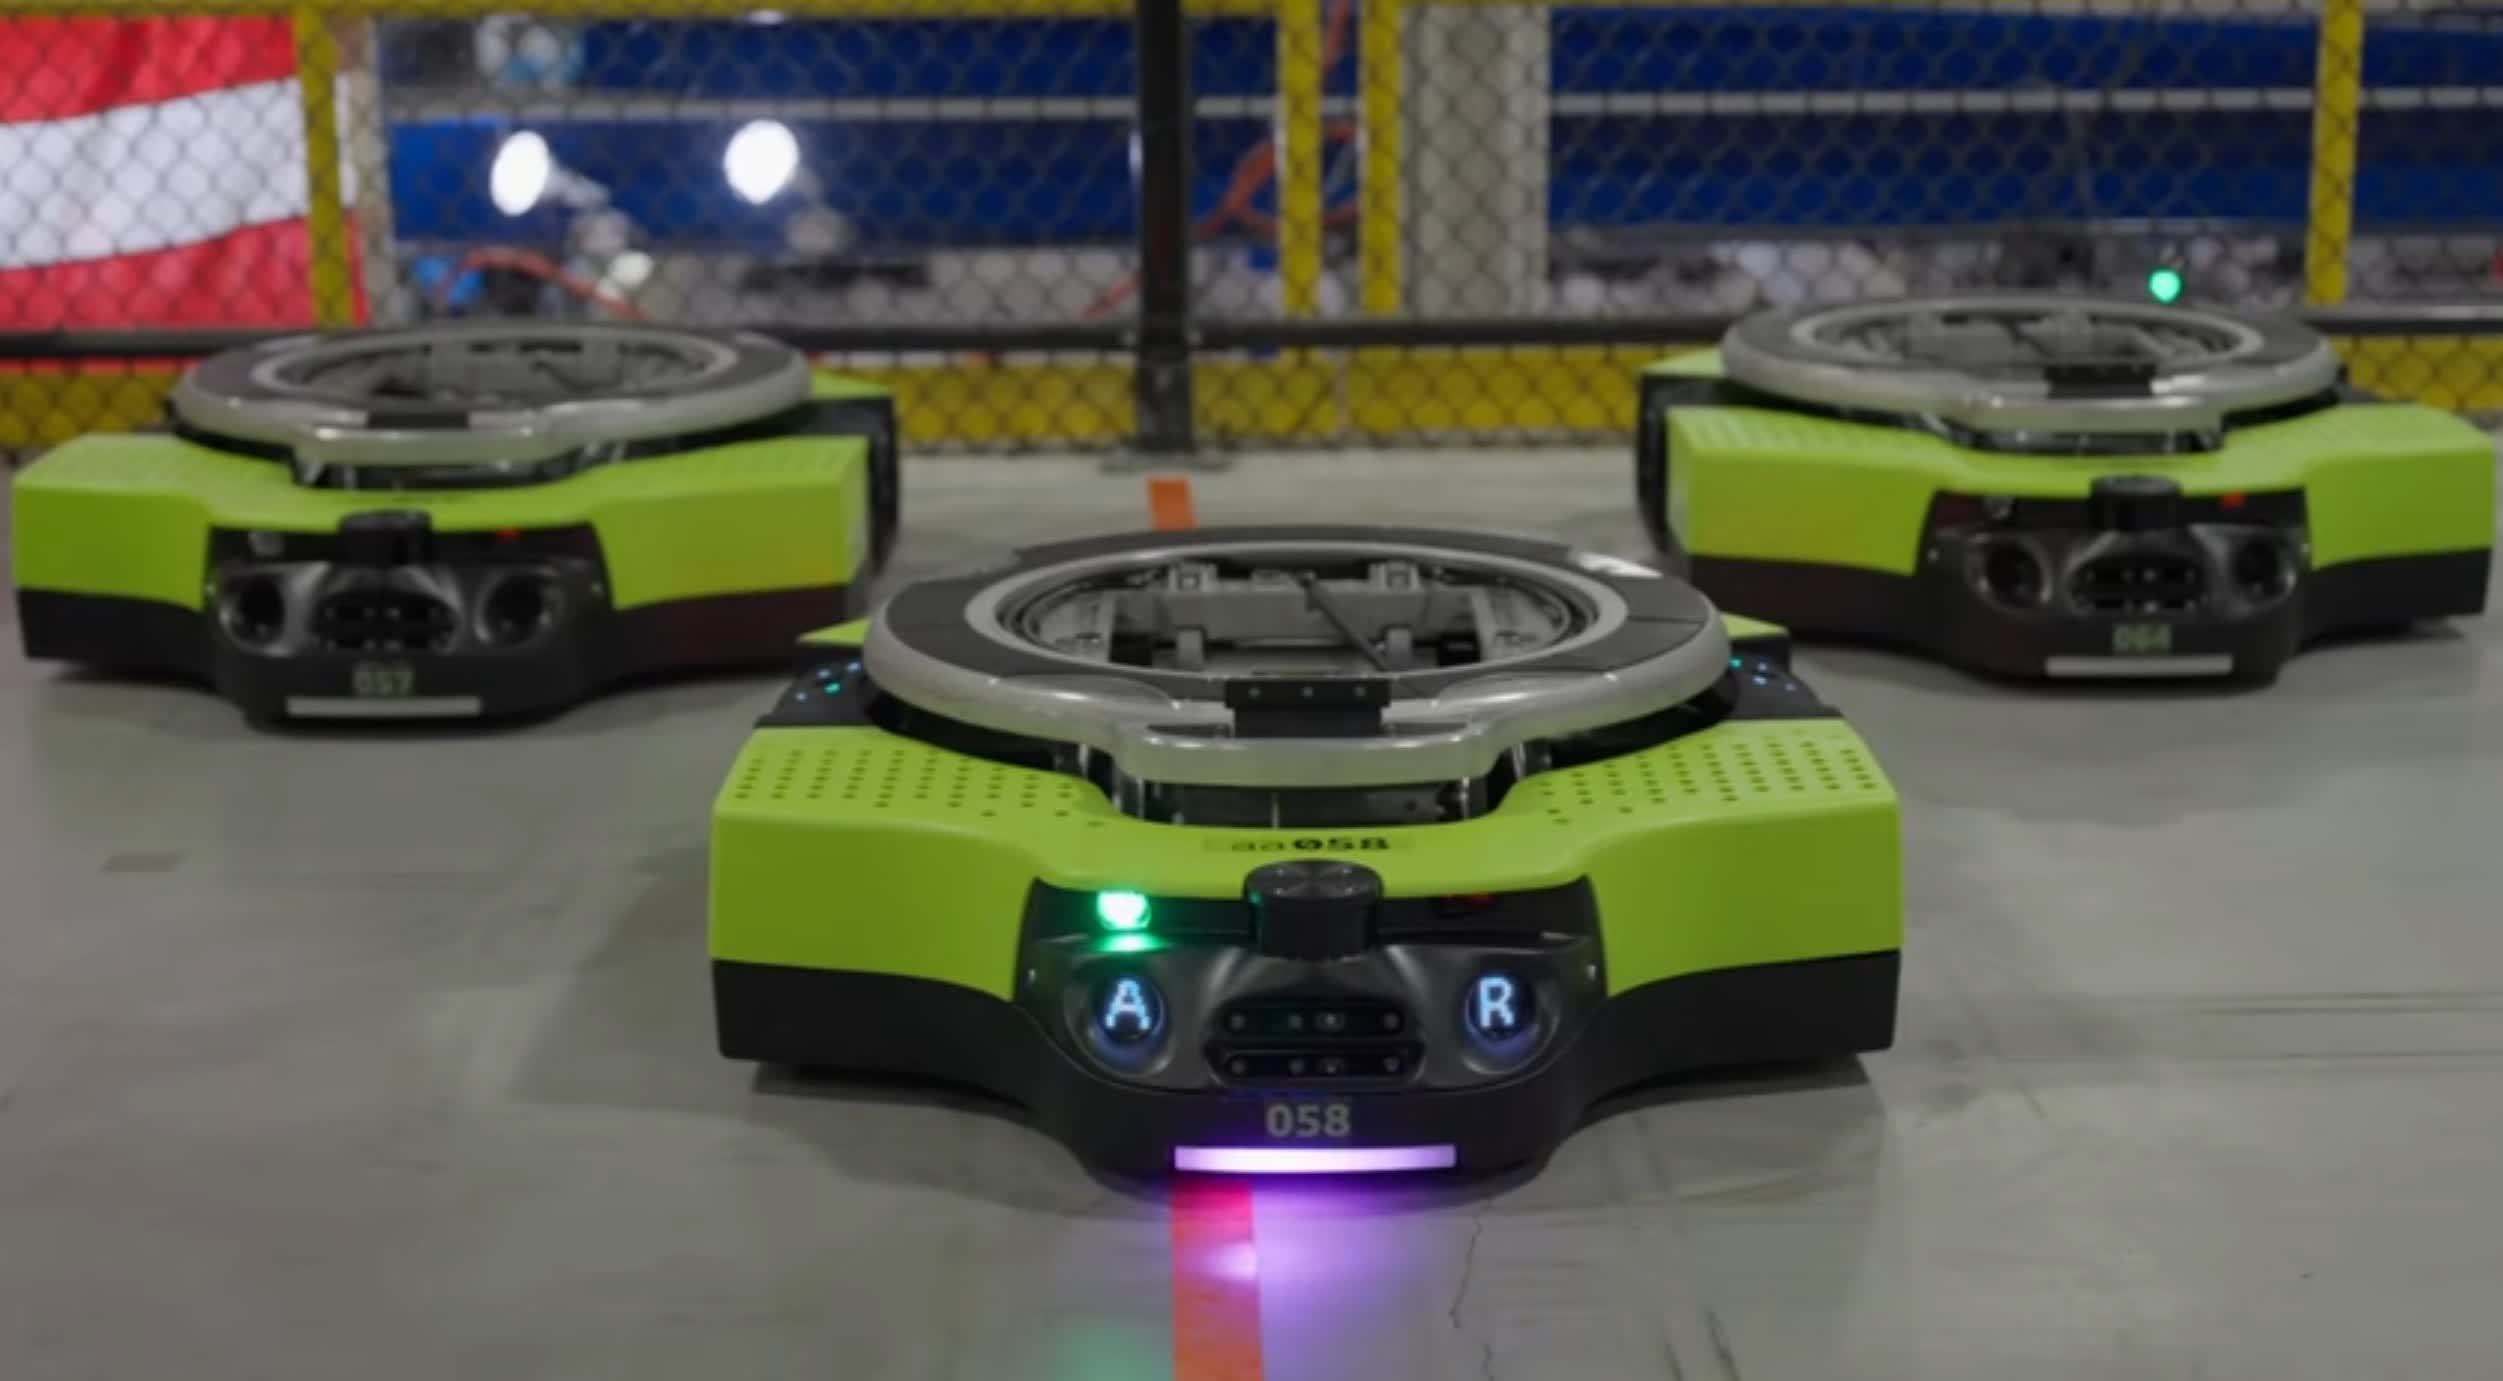 Amazon reveals its first autonomous warehouse robot that can work alongside humans